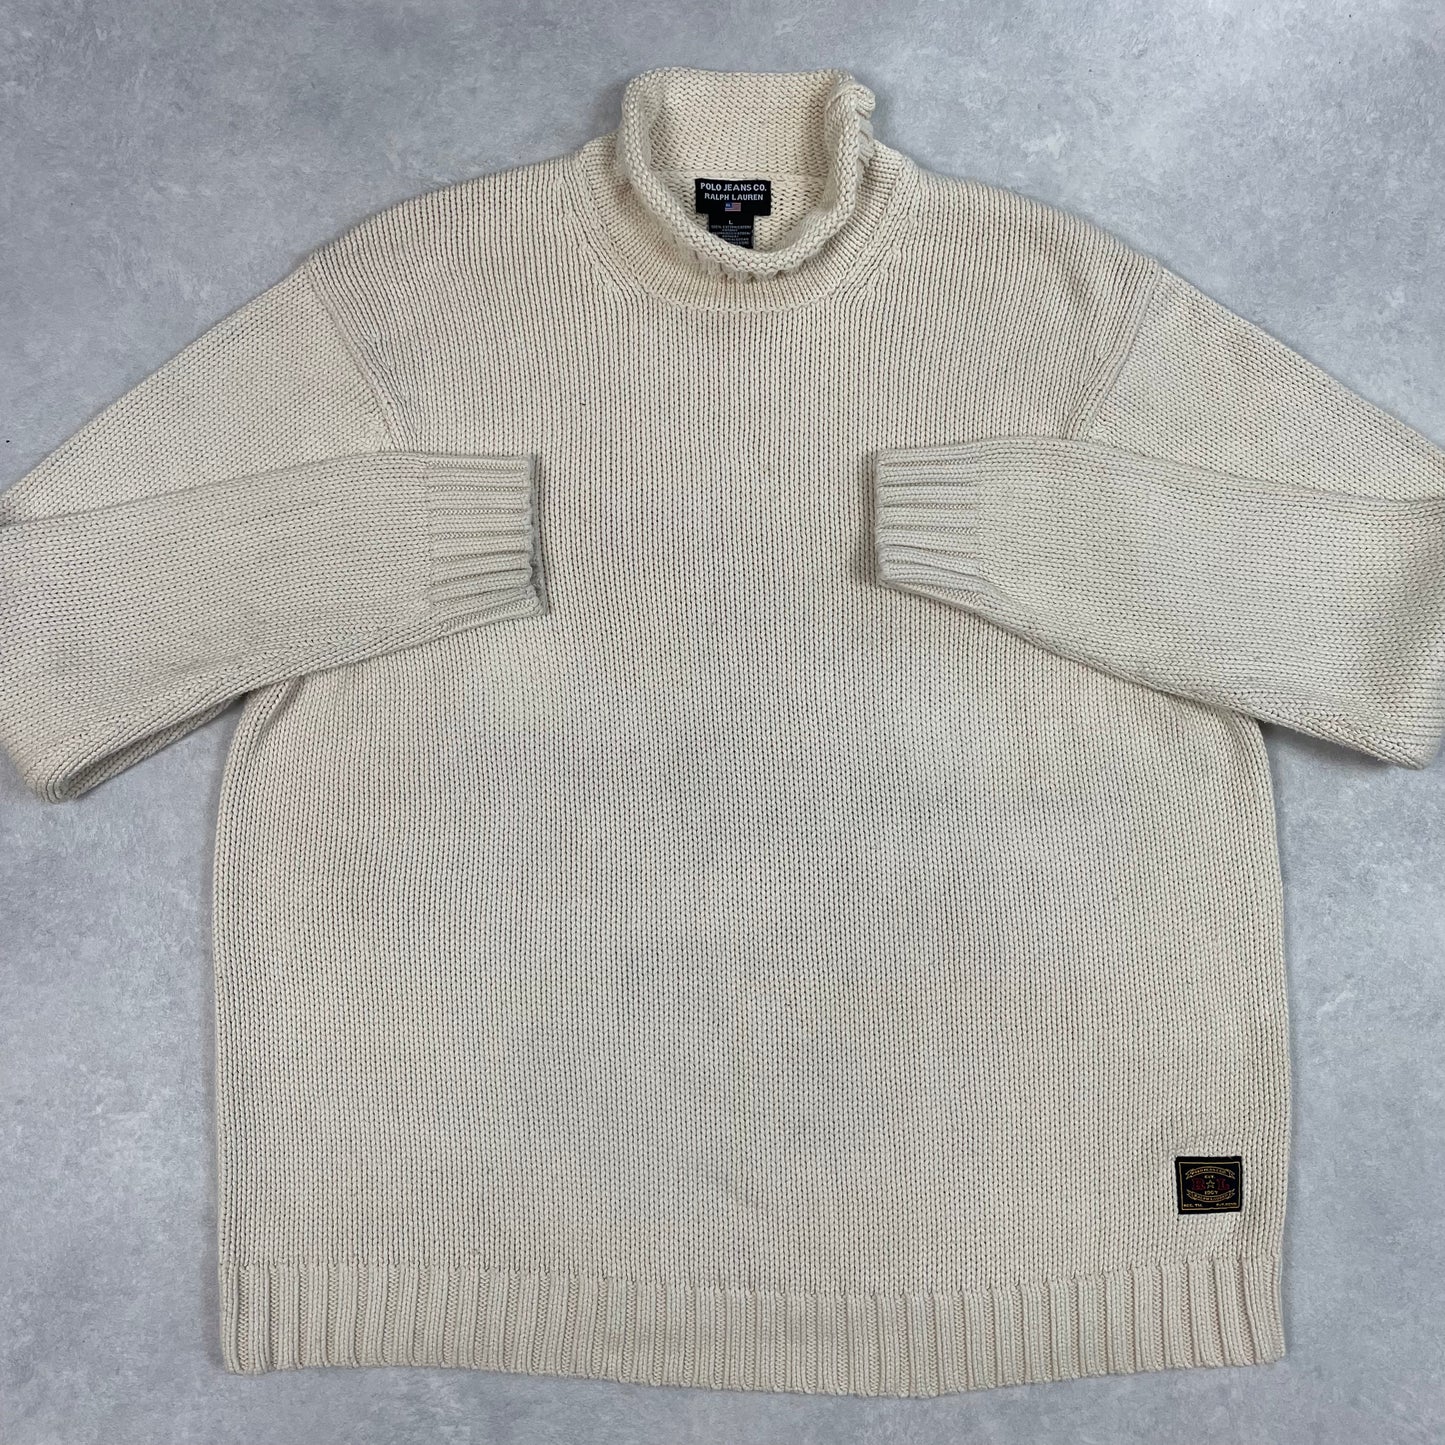 Polo J. Co. Ralph Lauren Sweater Off White Turtle Neck